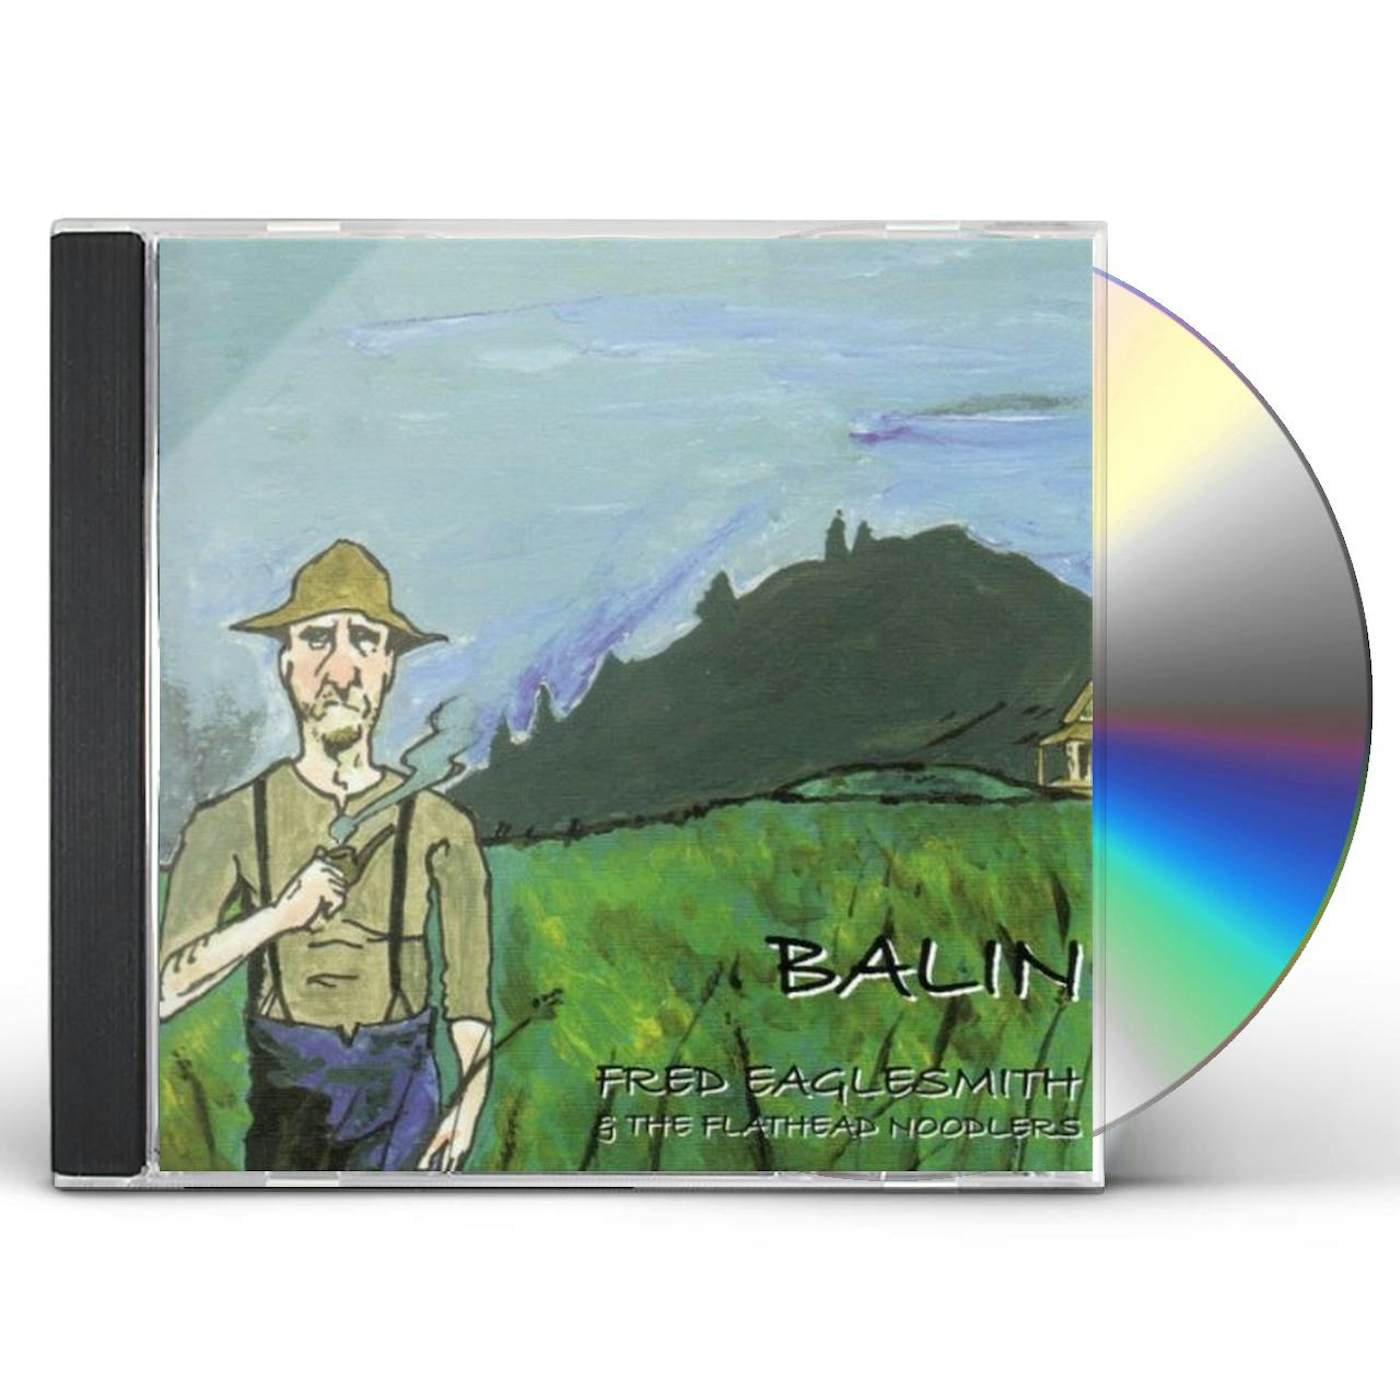 Fred Eaglesmith BALIN CD